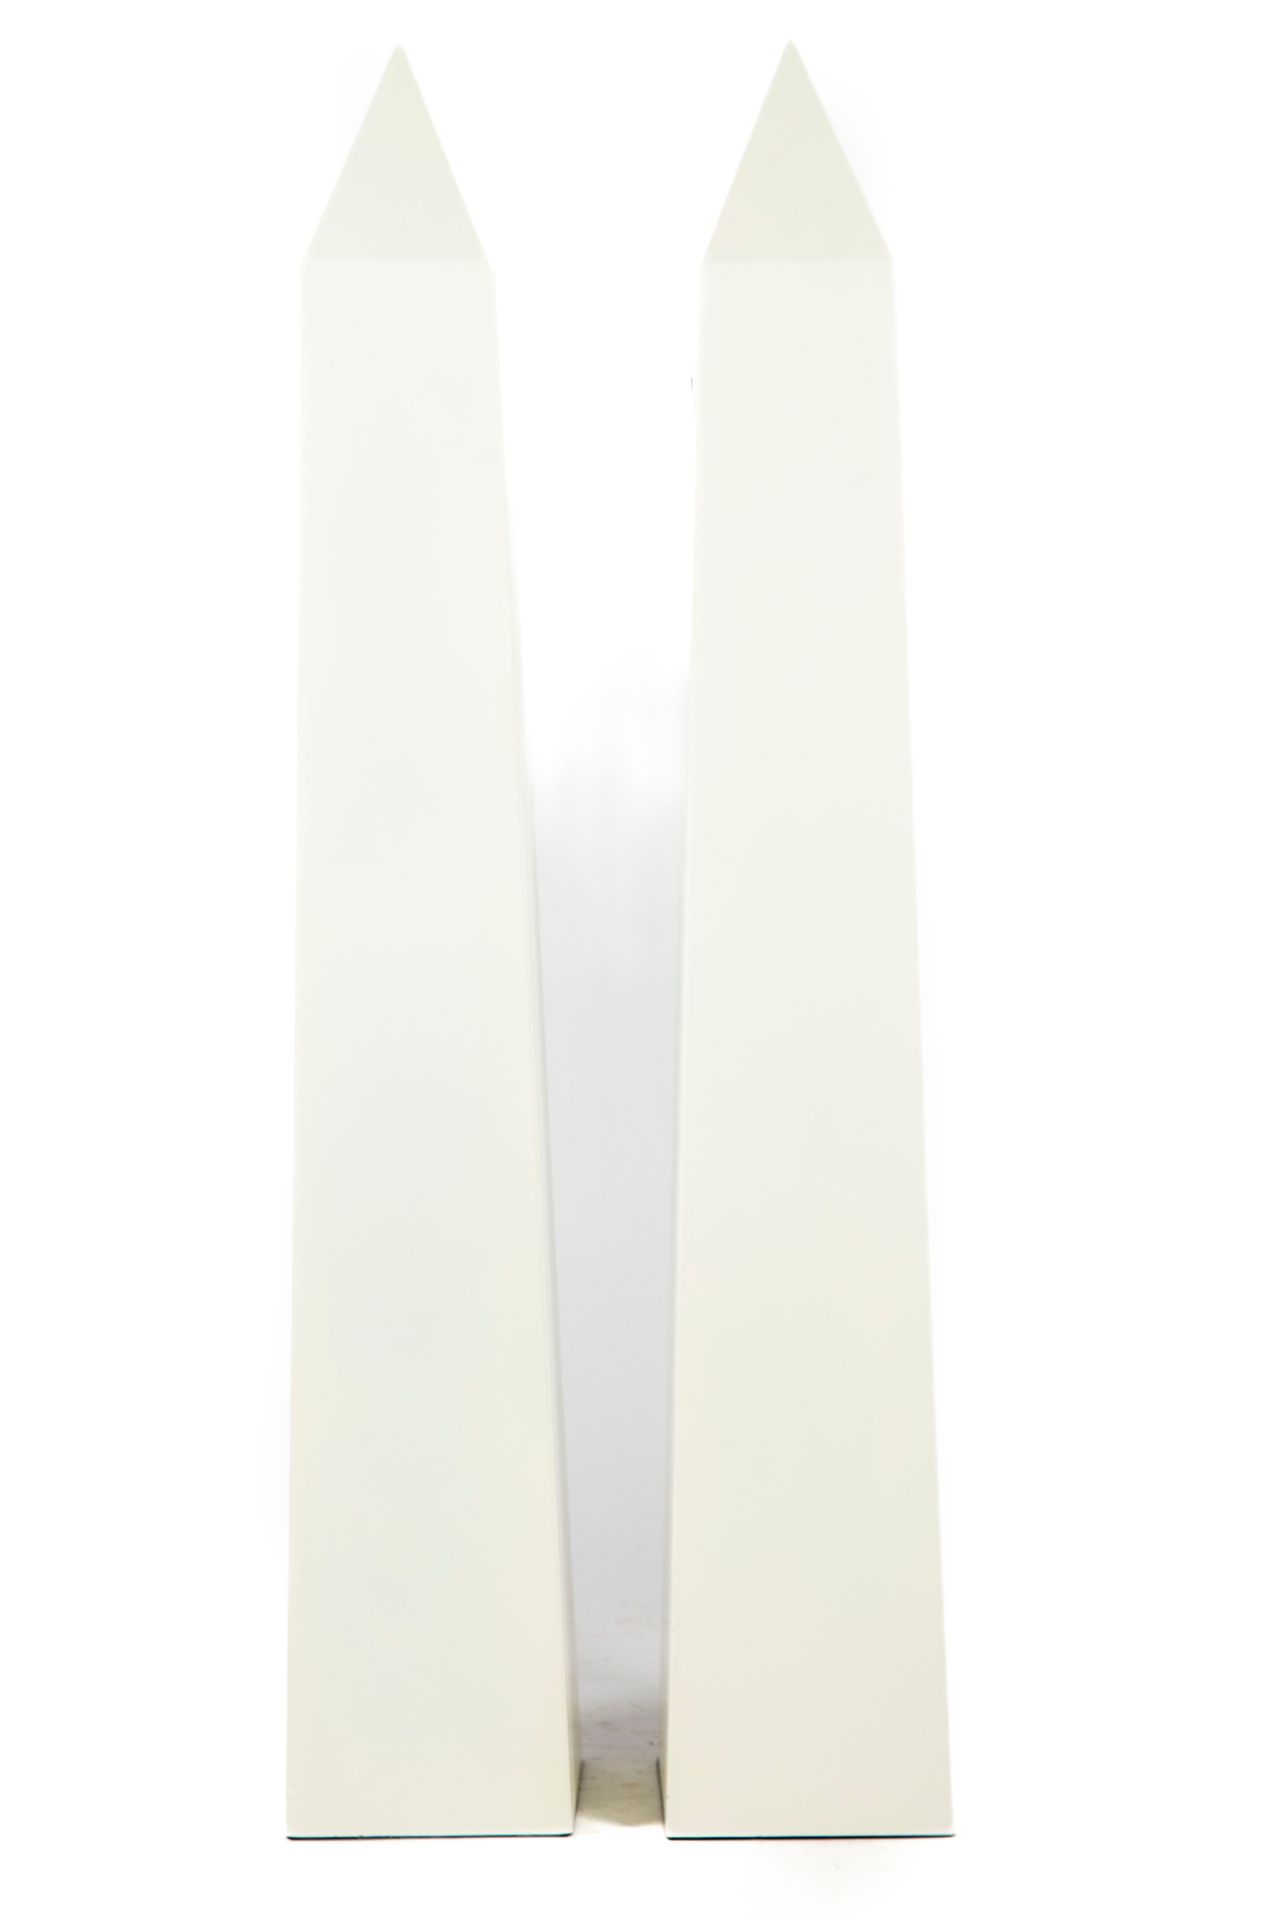 Null Gran par de obeliscos de resina blanca
H. 95 cm